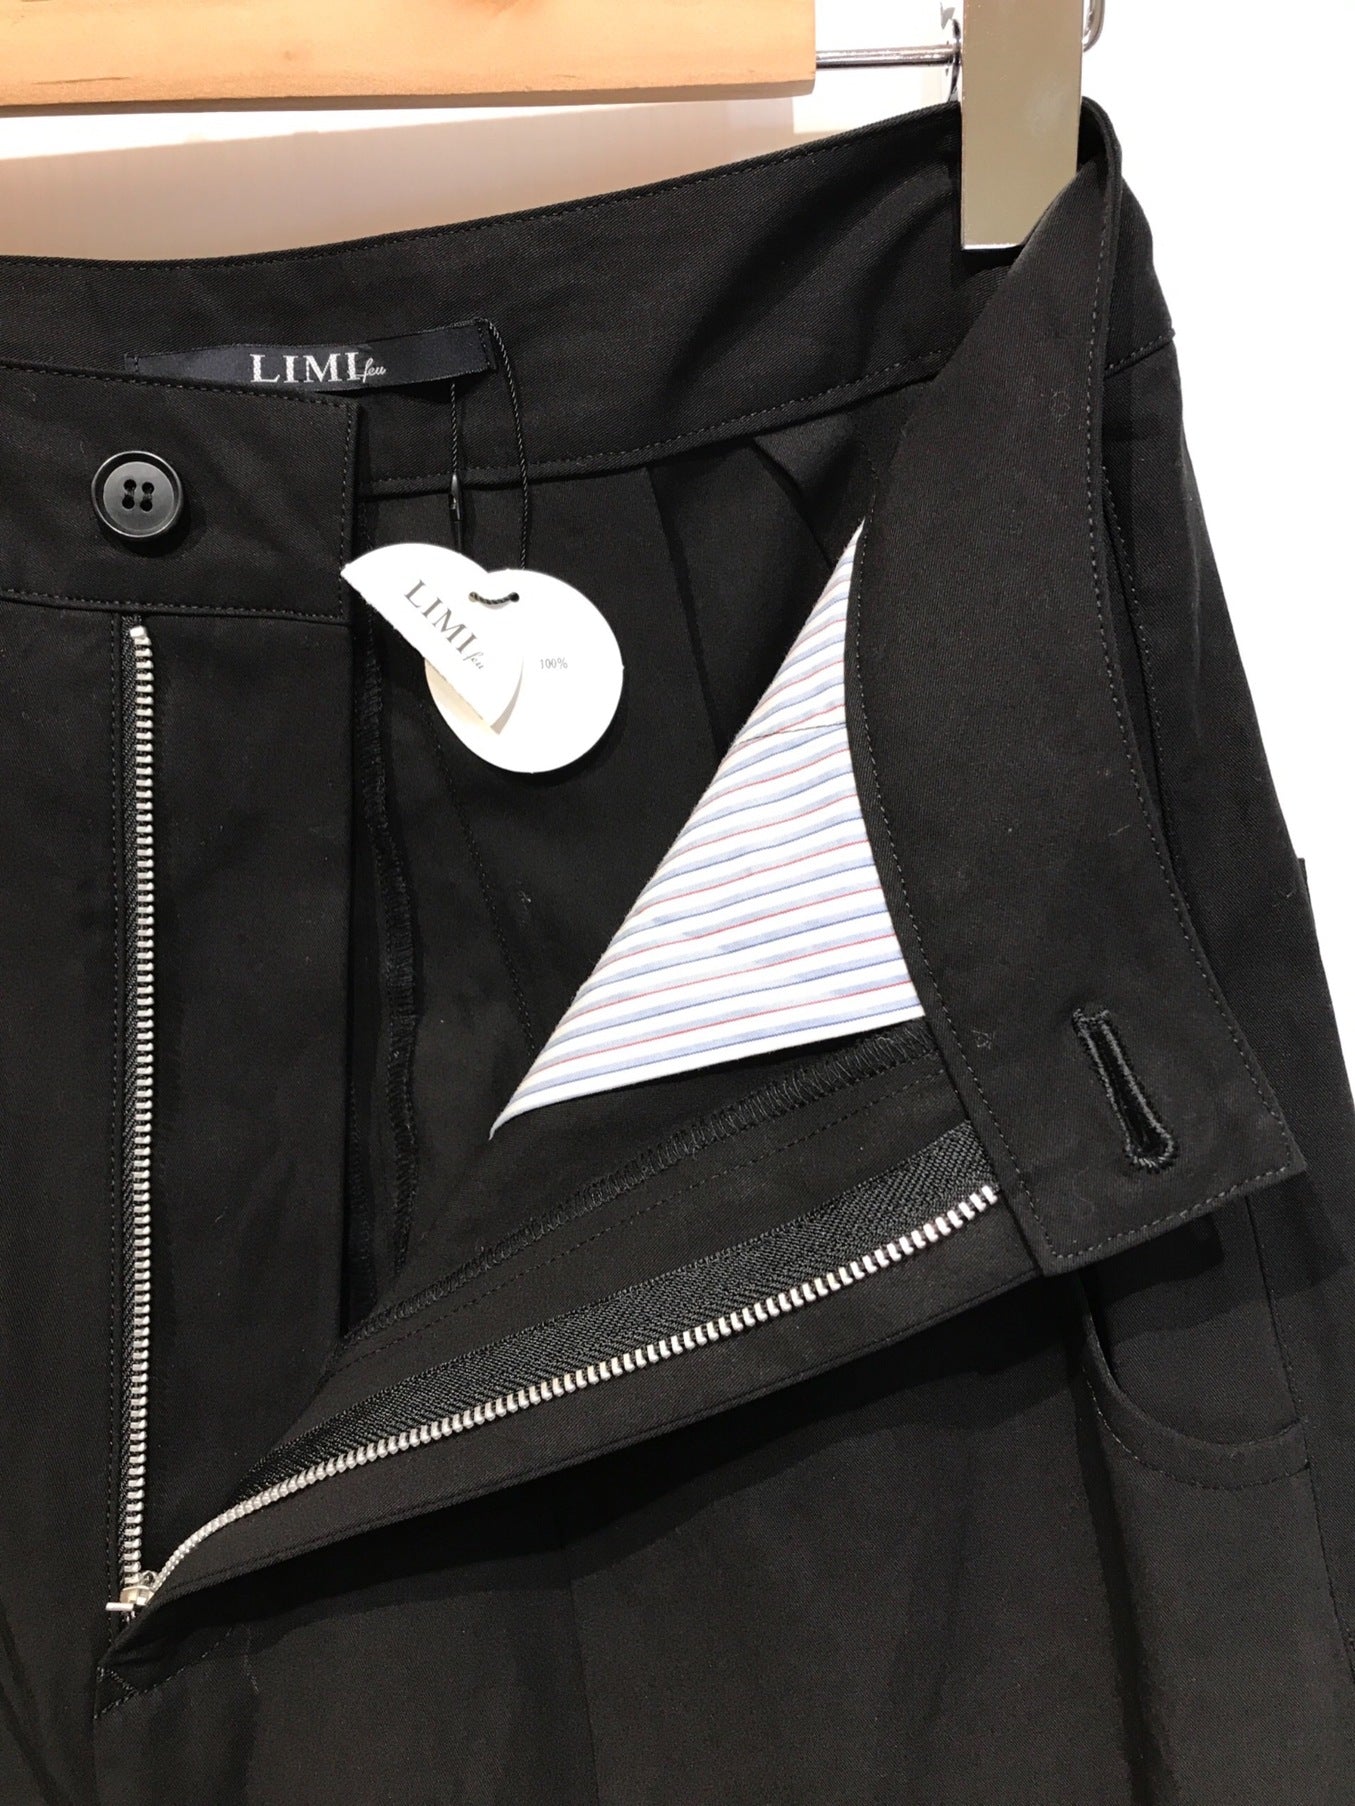 Limi Feu Calico A皮带宽裤LD-P02-003